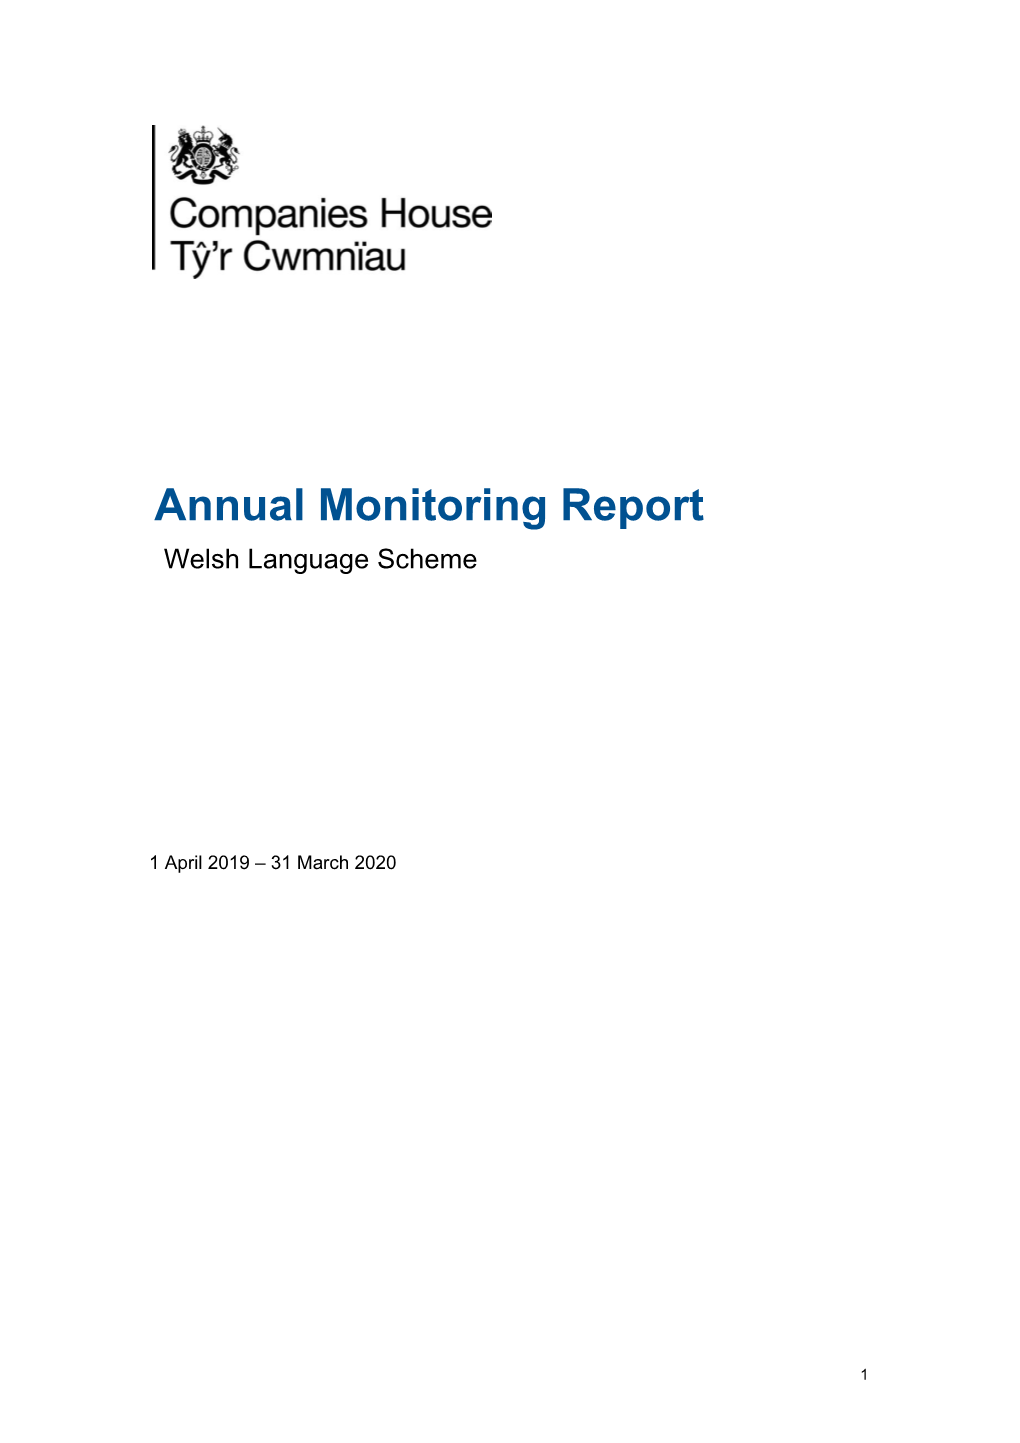 Companies House Welsh Language Scheme Monitoring Report 2019